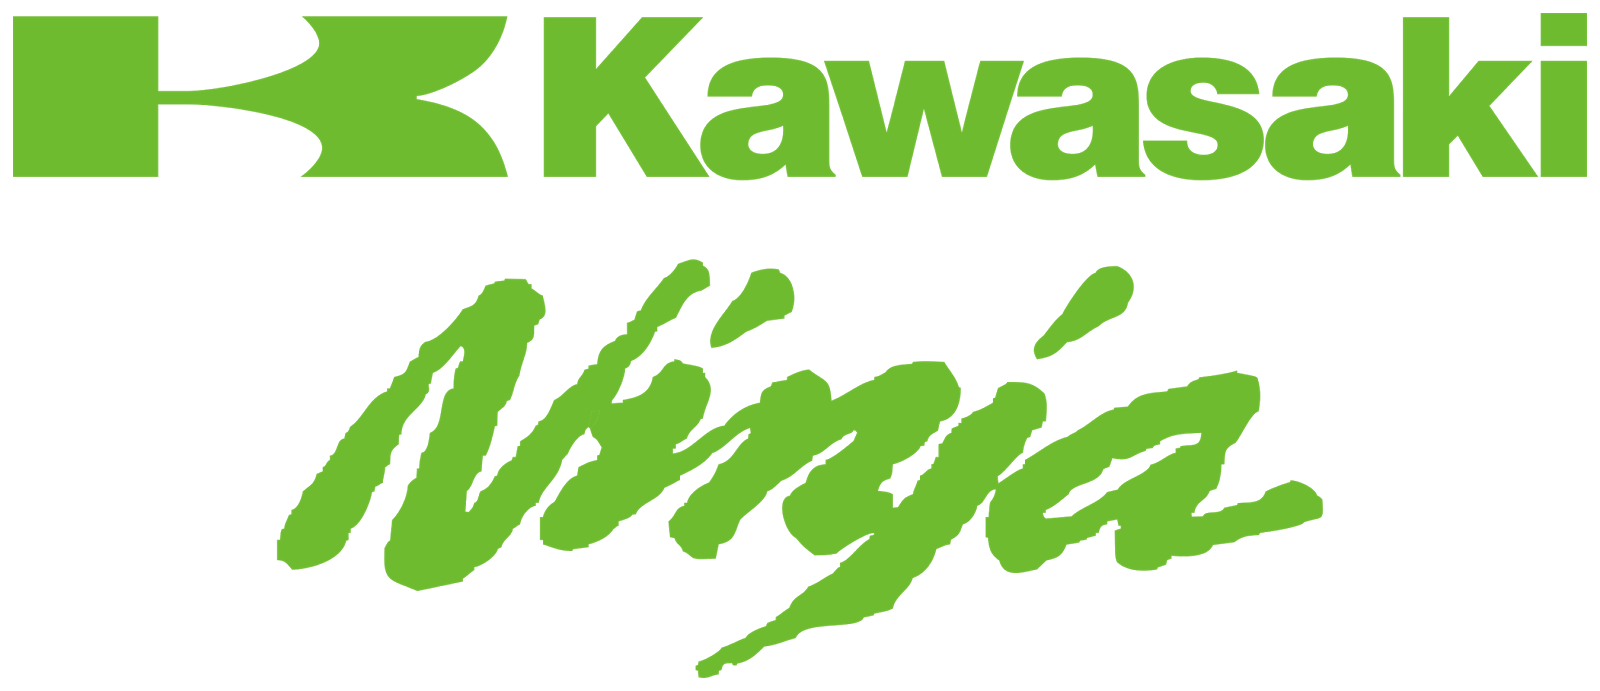 Kawasaki Ninja Logo - Kawasaki ninja Logos